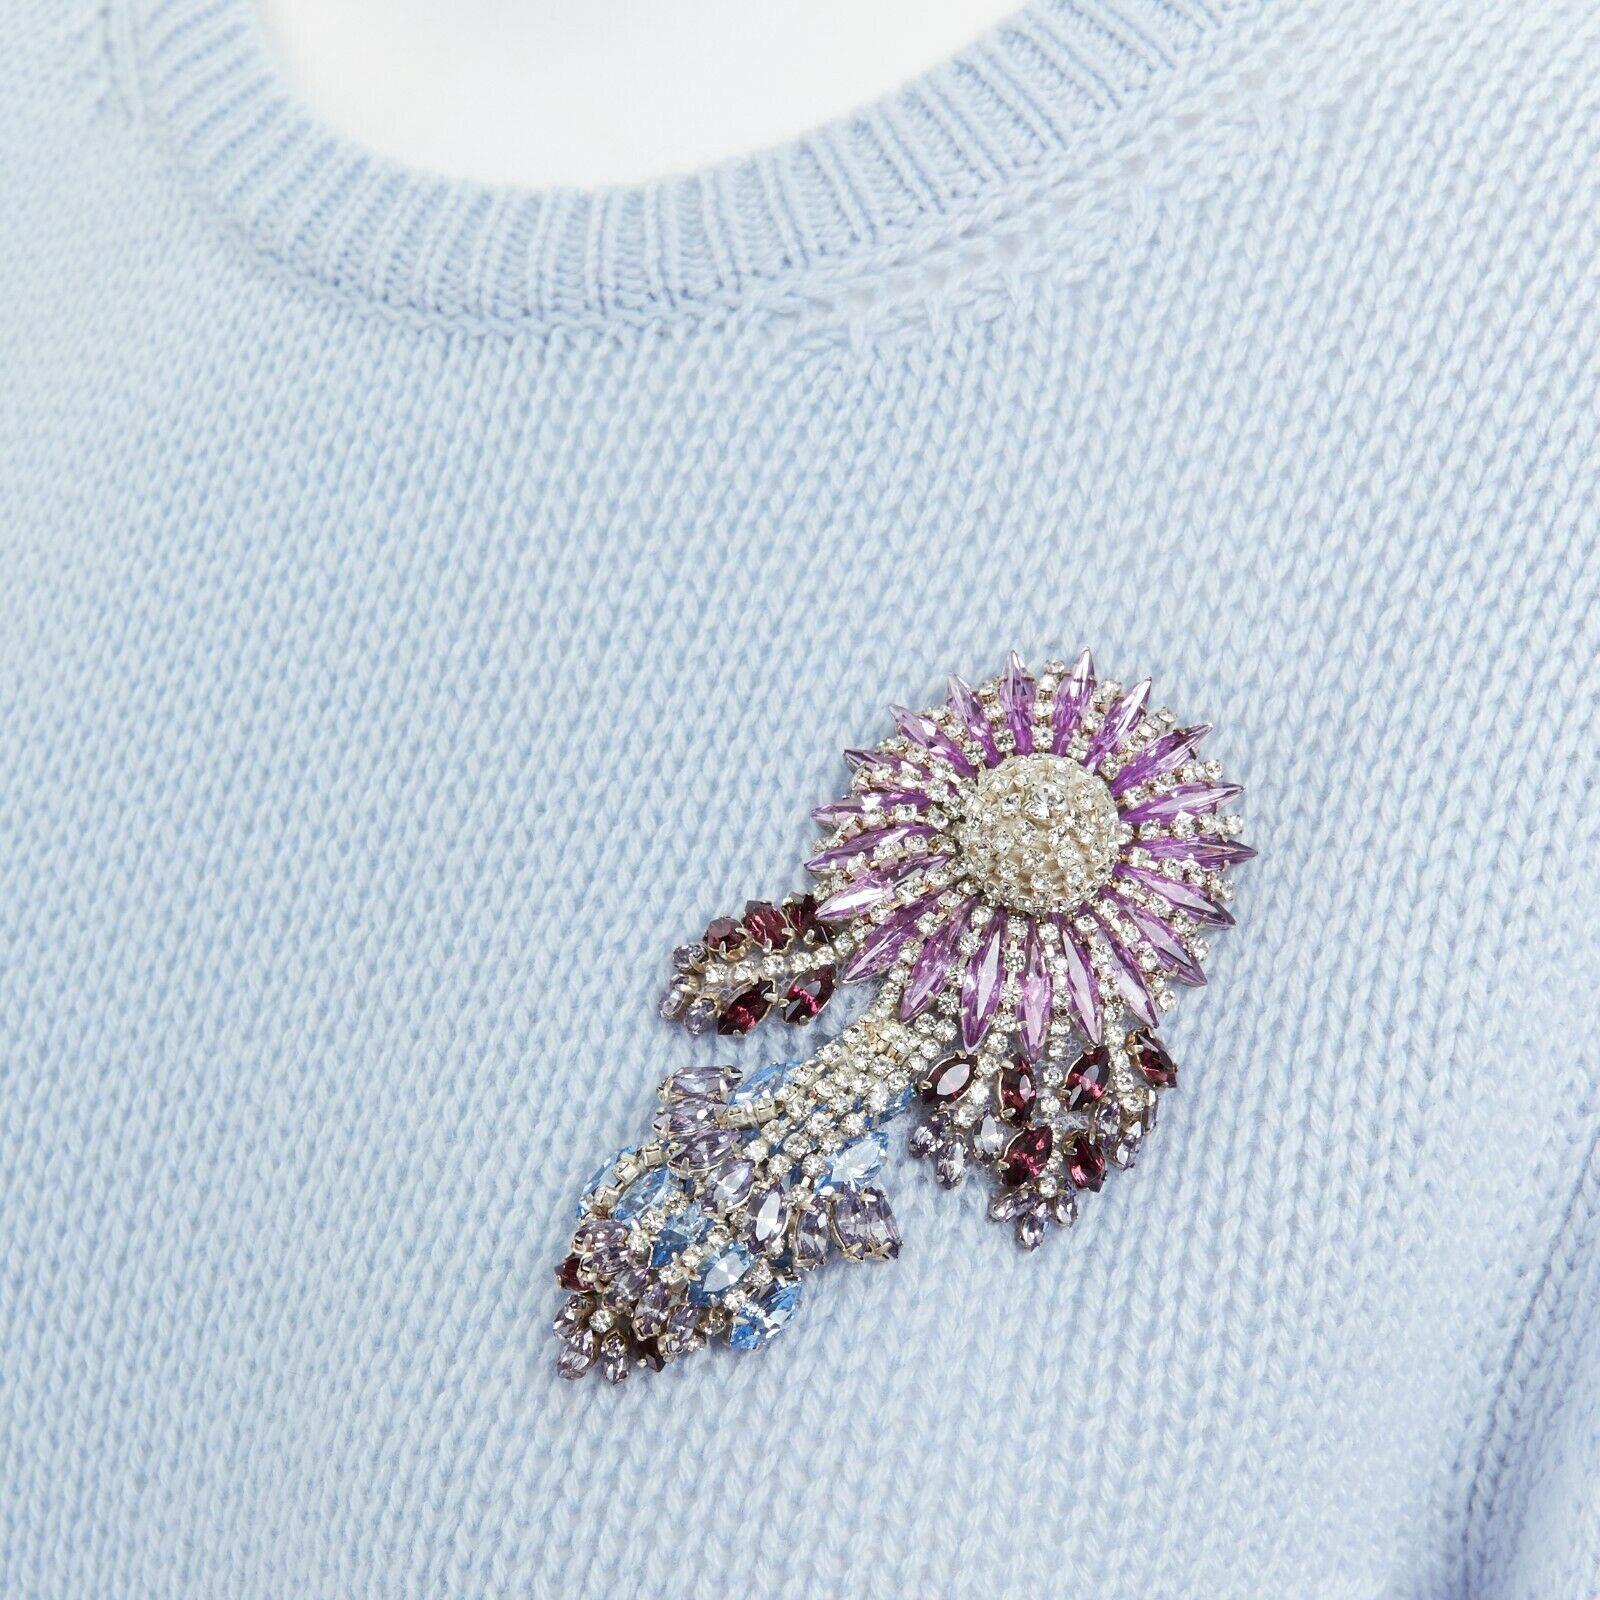 MIU MIU wool knit pastel blue crystal embellished flower brooch sweater top M 1